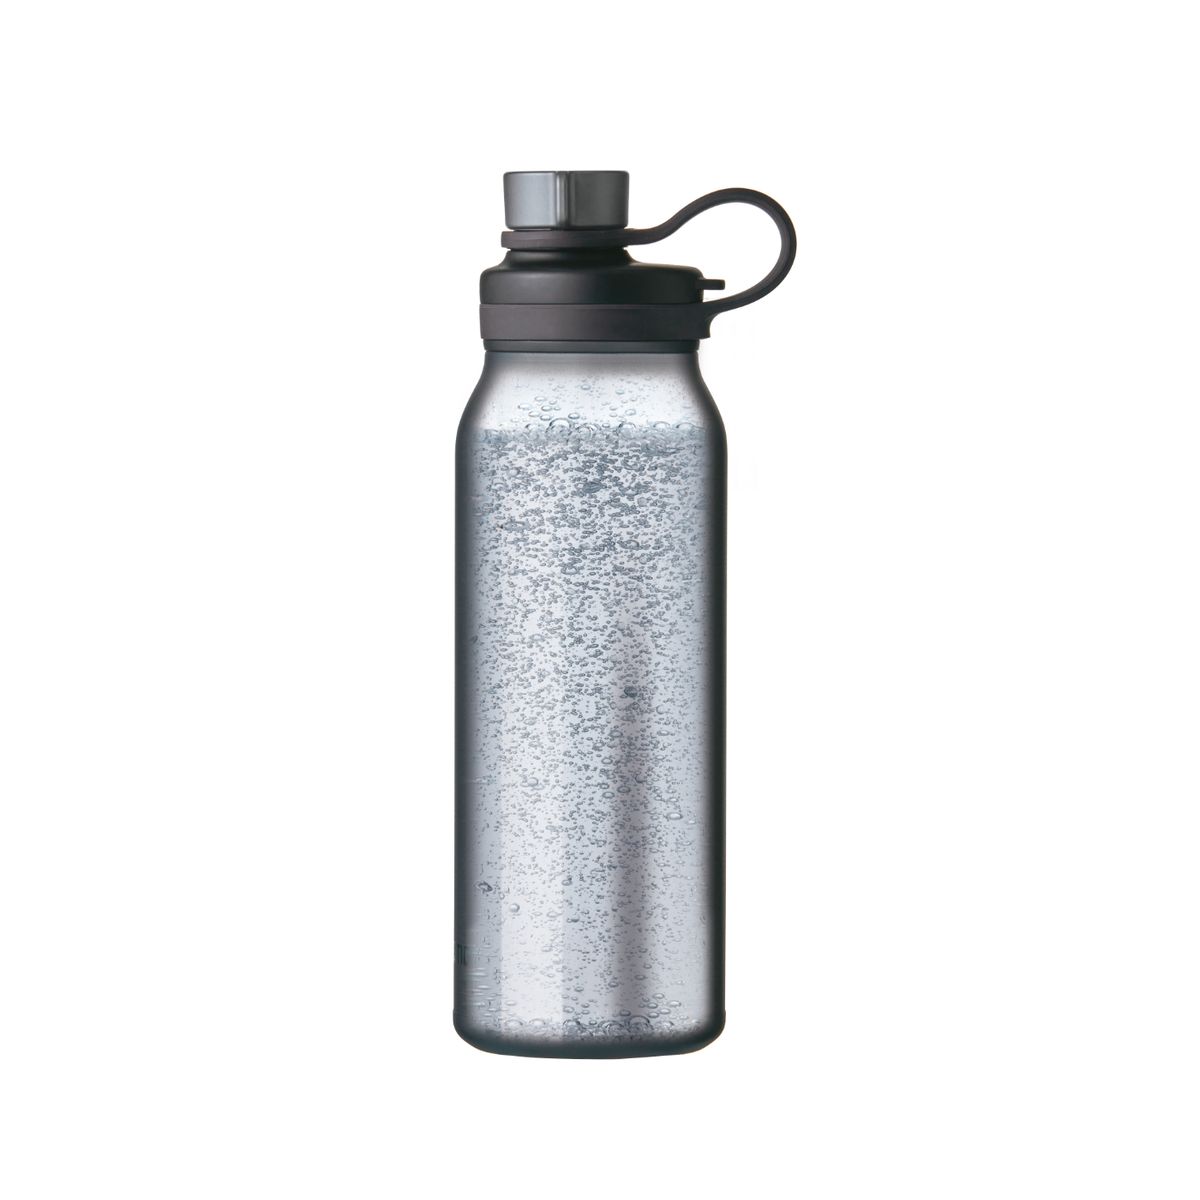 TIGER 真空断熱炭酸ボトル 保冷専用 カッパー 0.8L 抗菌加工 本体・栓丸洗い可 ダイレクトボトル